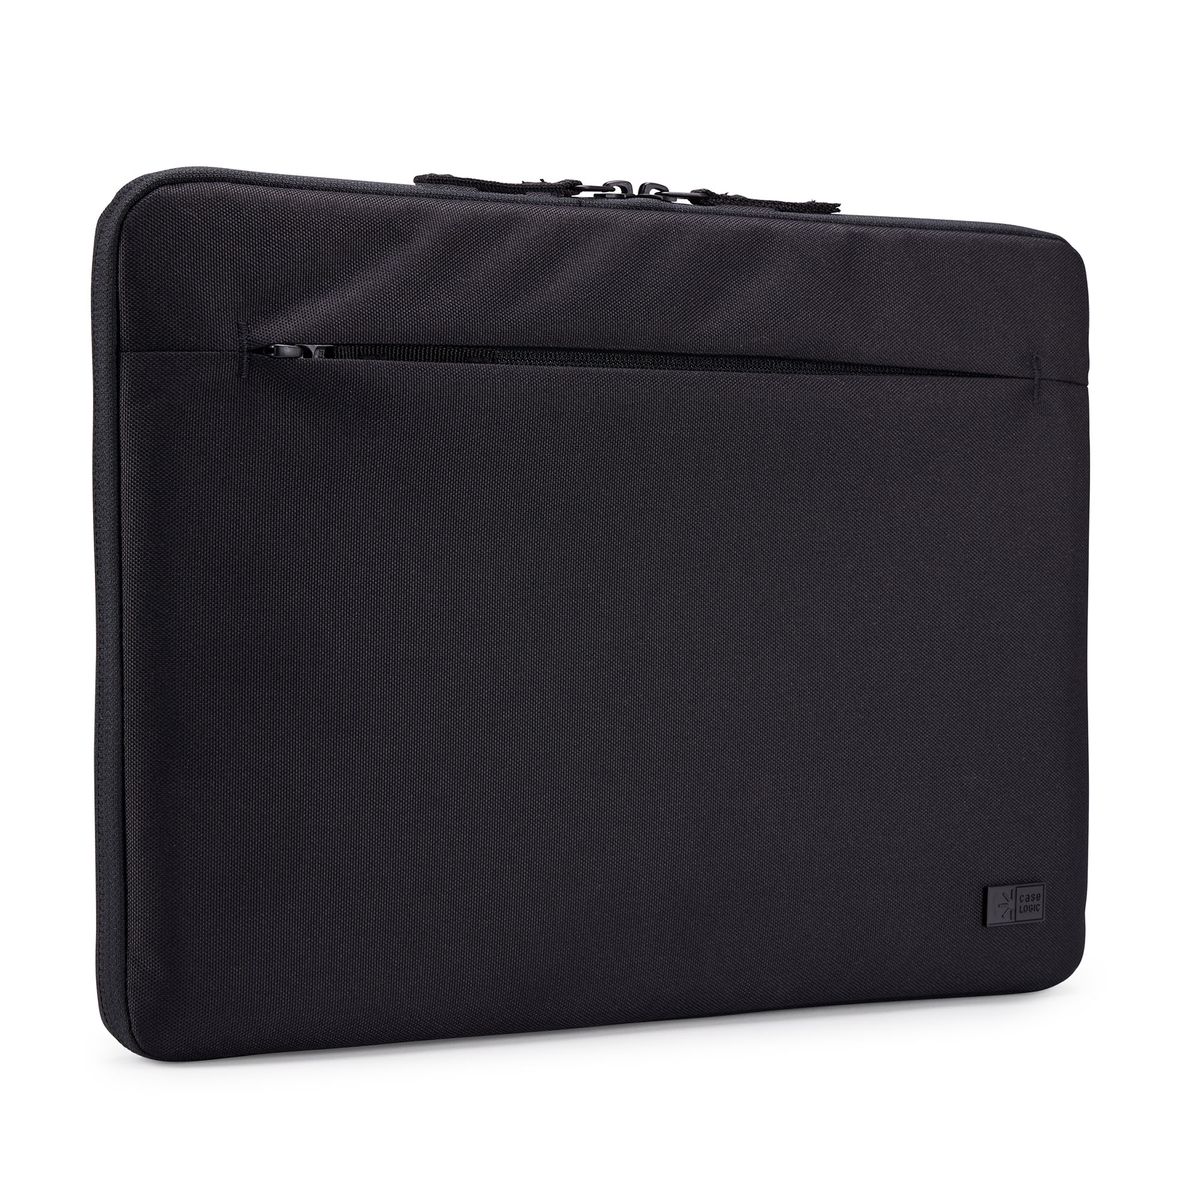 Case Logic Invigo 14" laptop sleeve